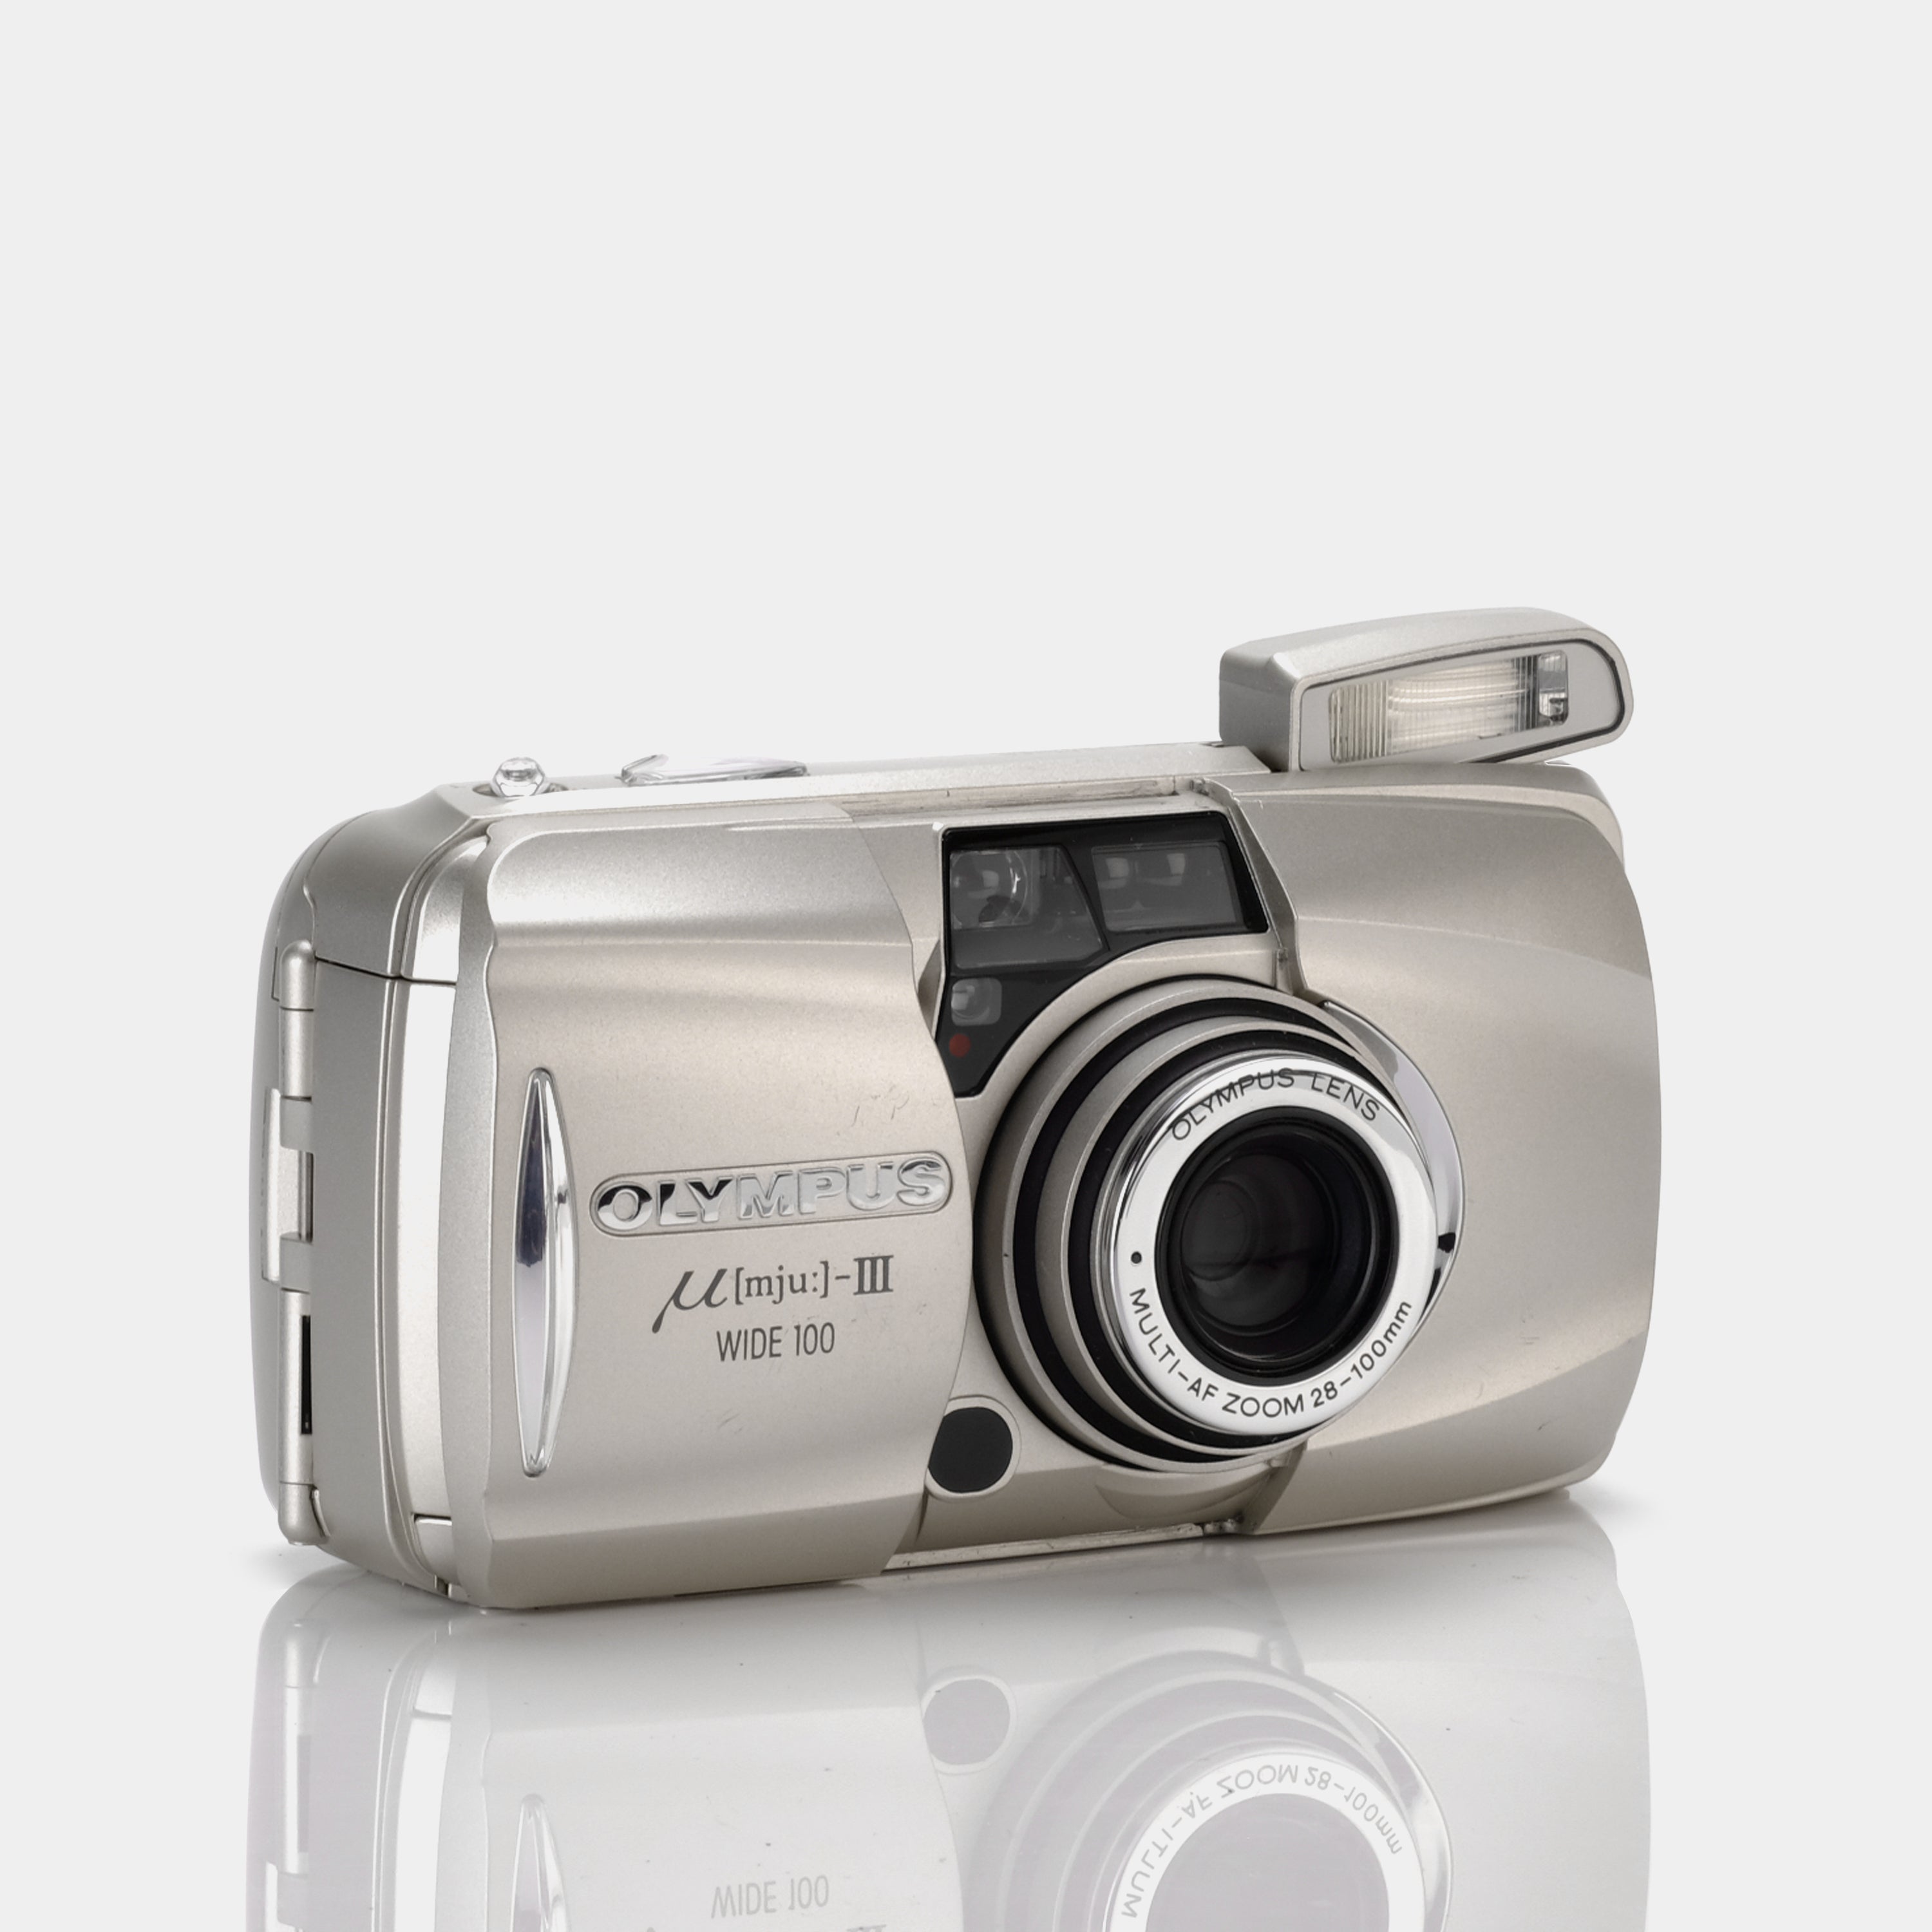 Olympus Stylus MJU III Wide 100 35mm Point And Shoot Film Camera